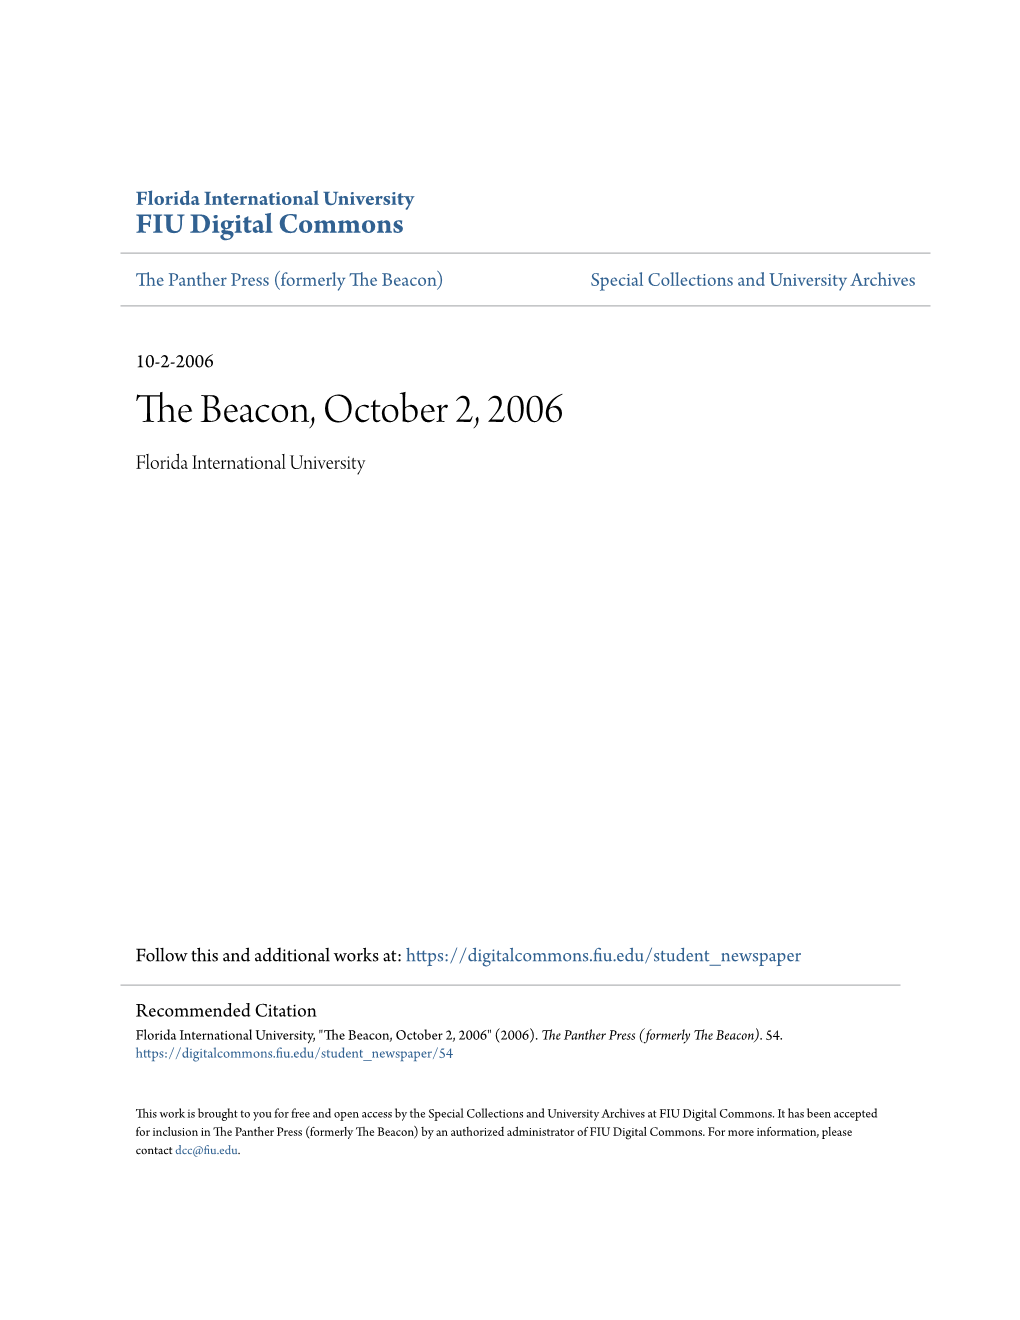 The Beacon, October 2, 2006 Florida International University